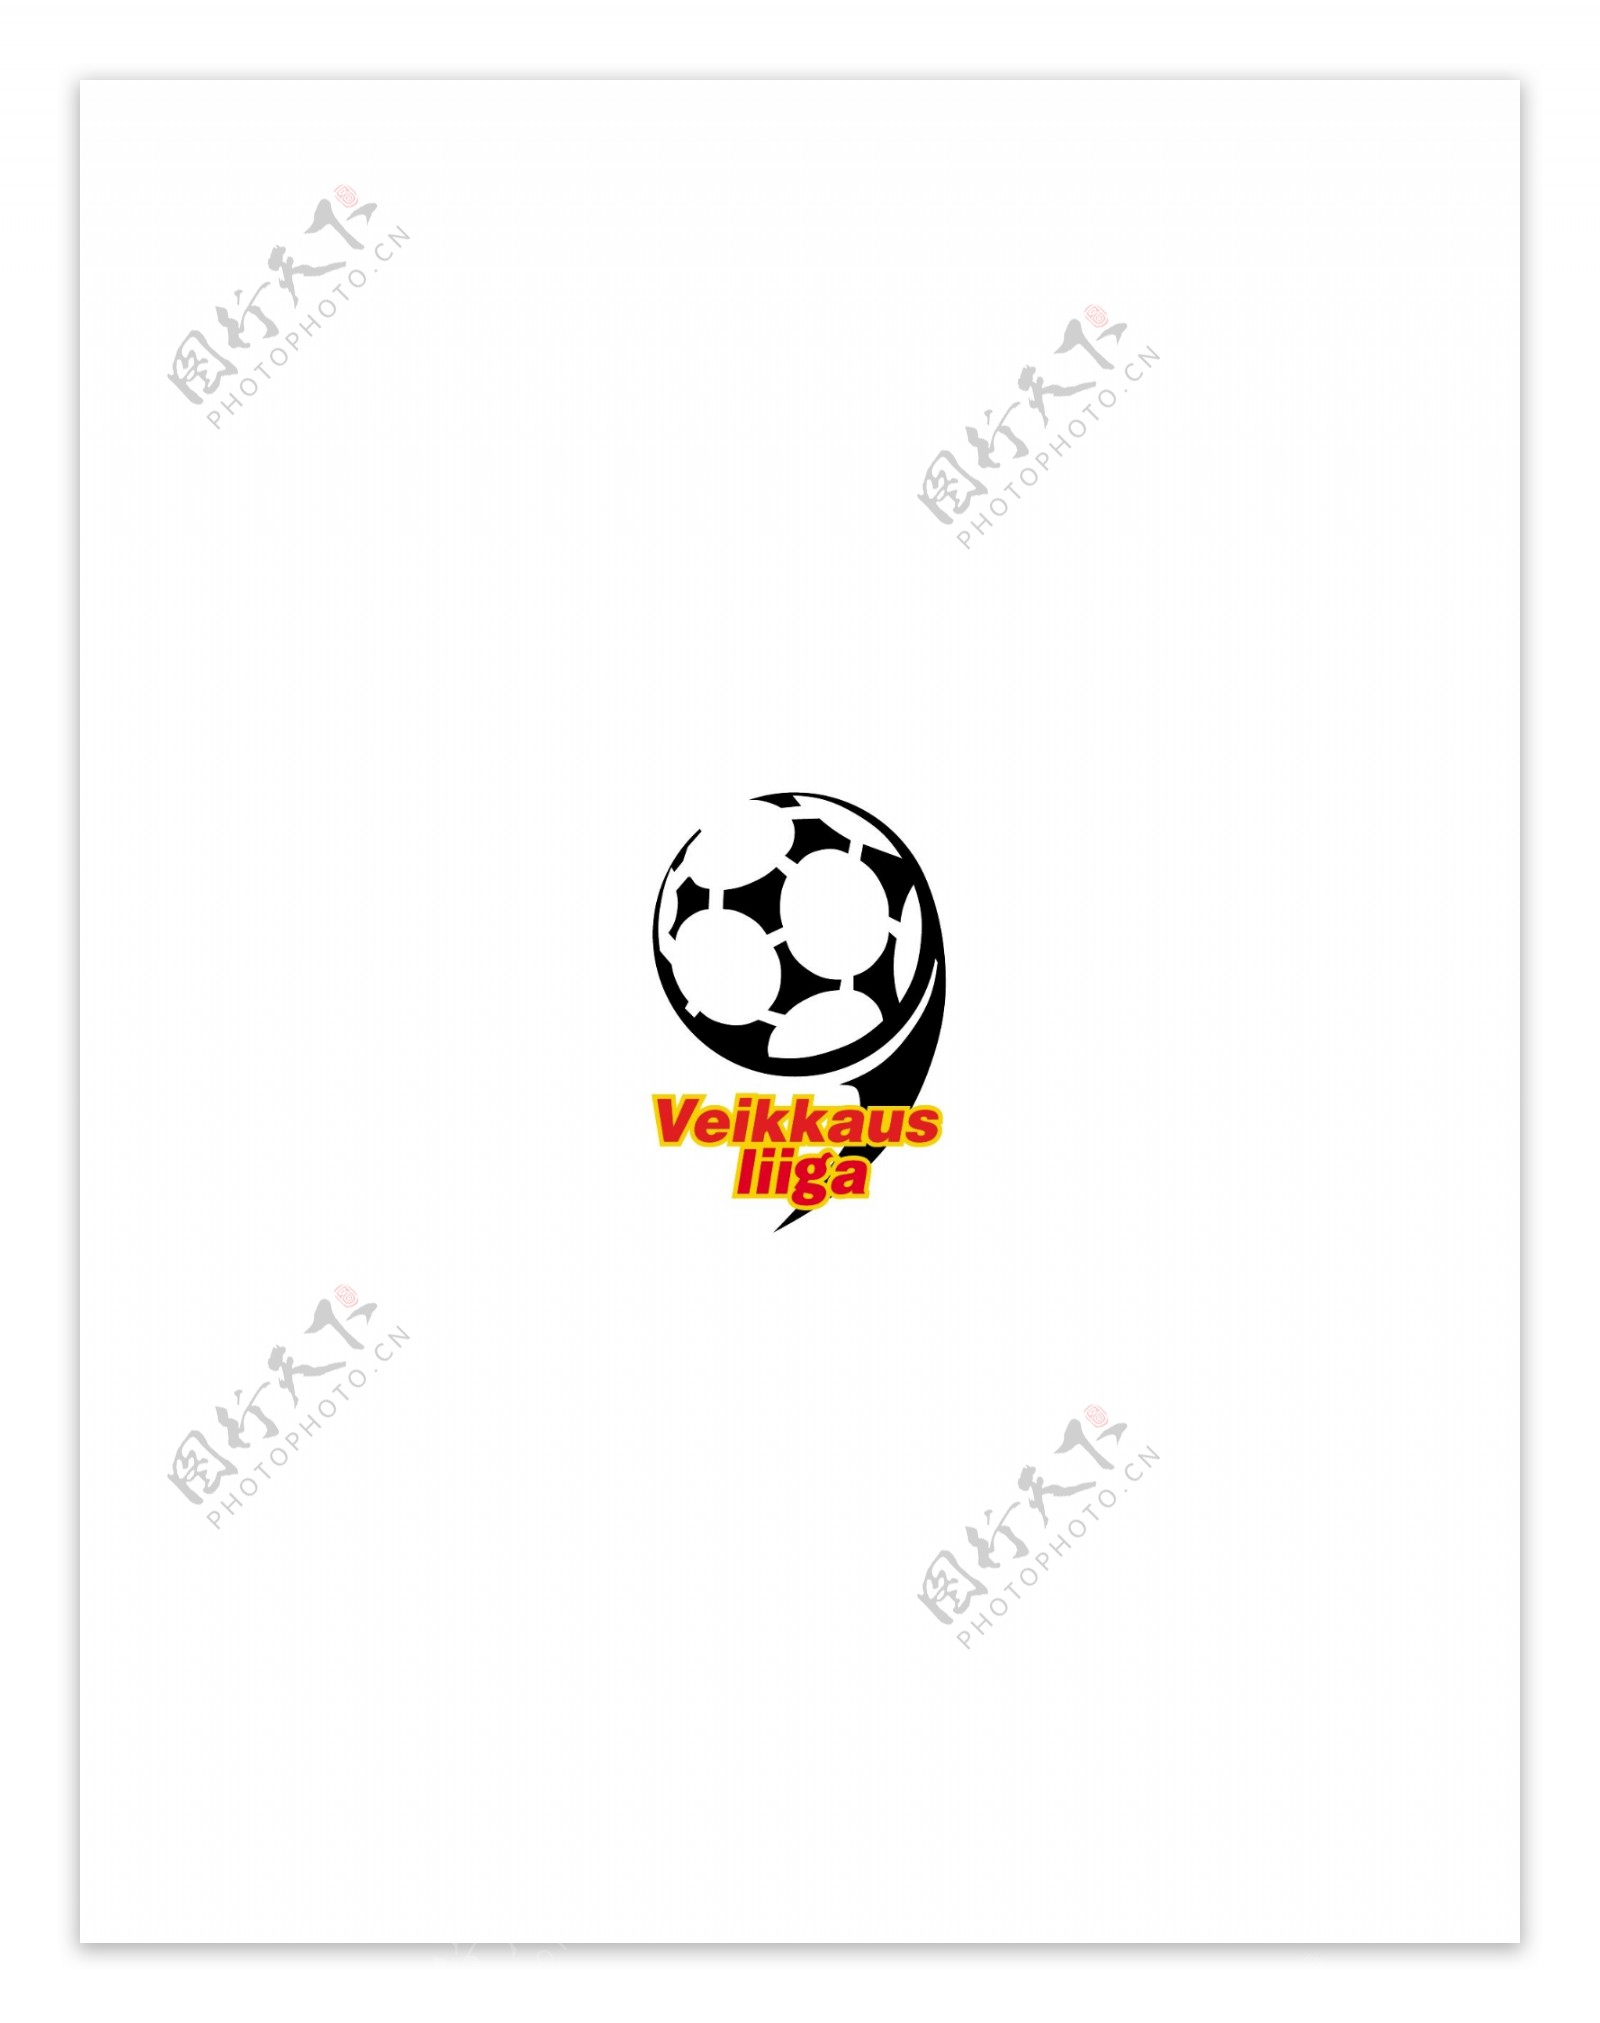 FinlandVeikkausliigalogo设计欣赏足球和IT公司标志FinlandVeikkausliiga下载标志设计欣赏